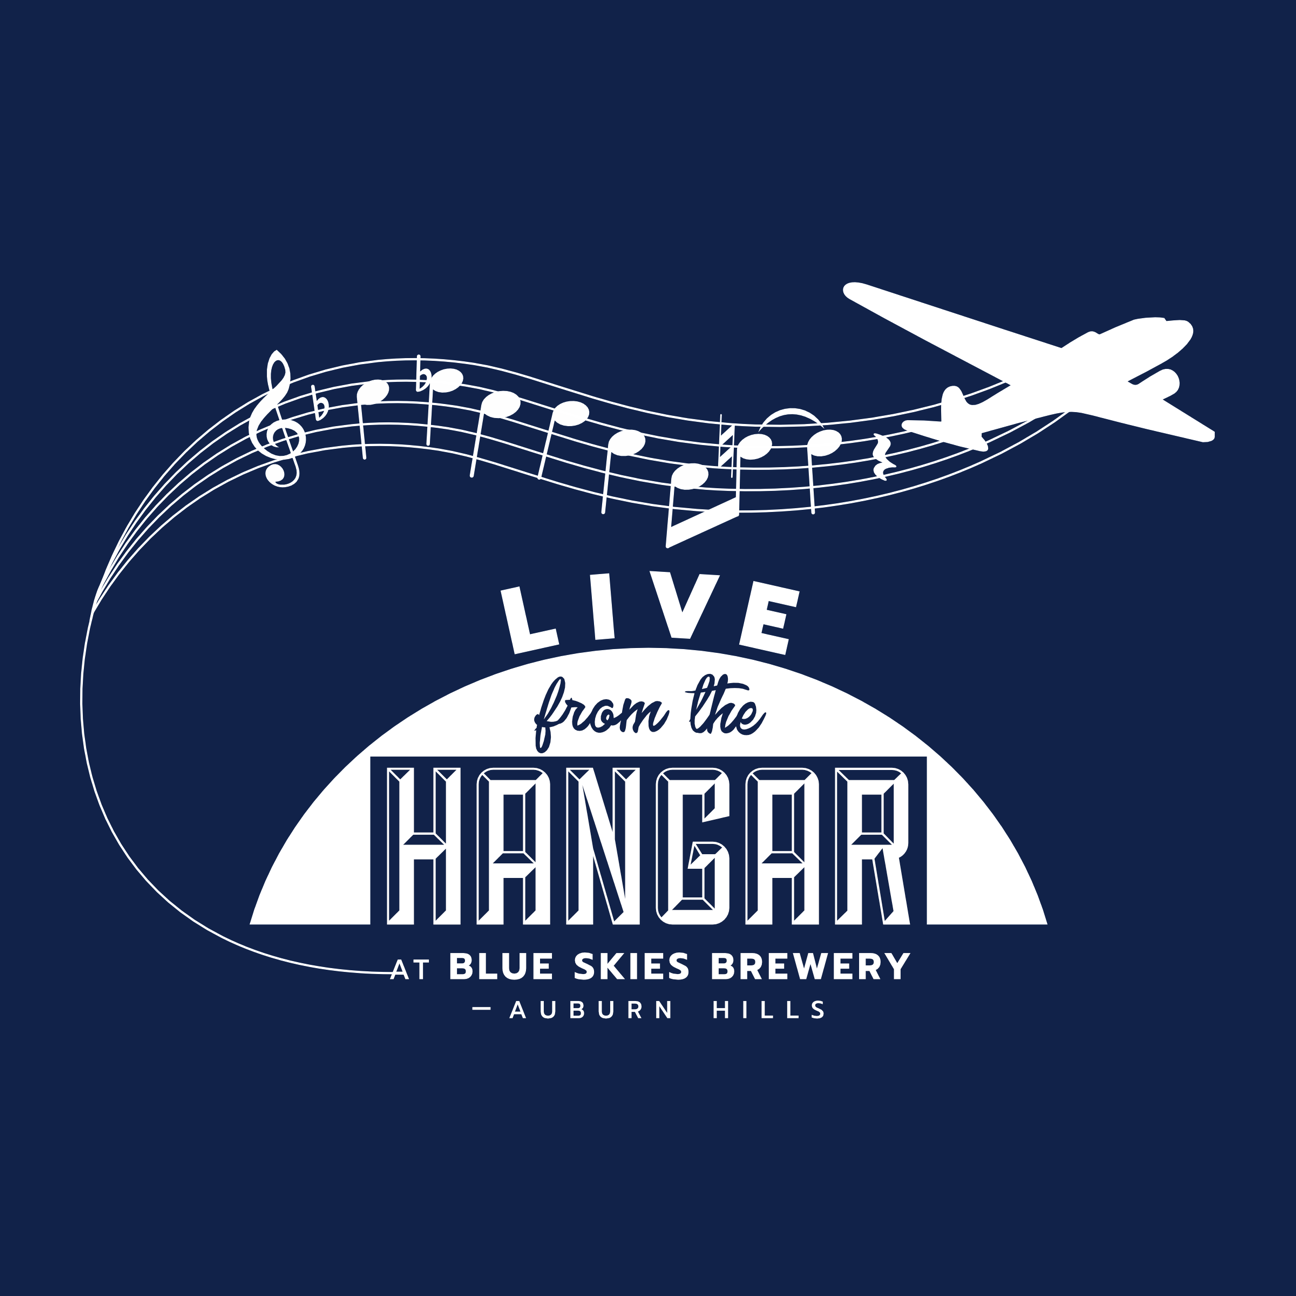 Blue Skies Brewery-Auburn Hills: Events